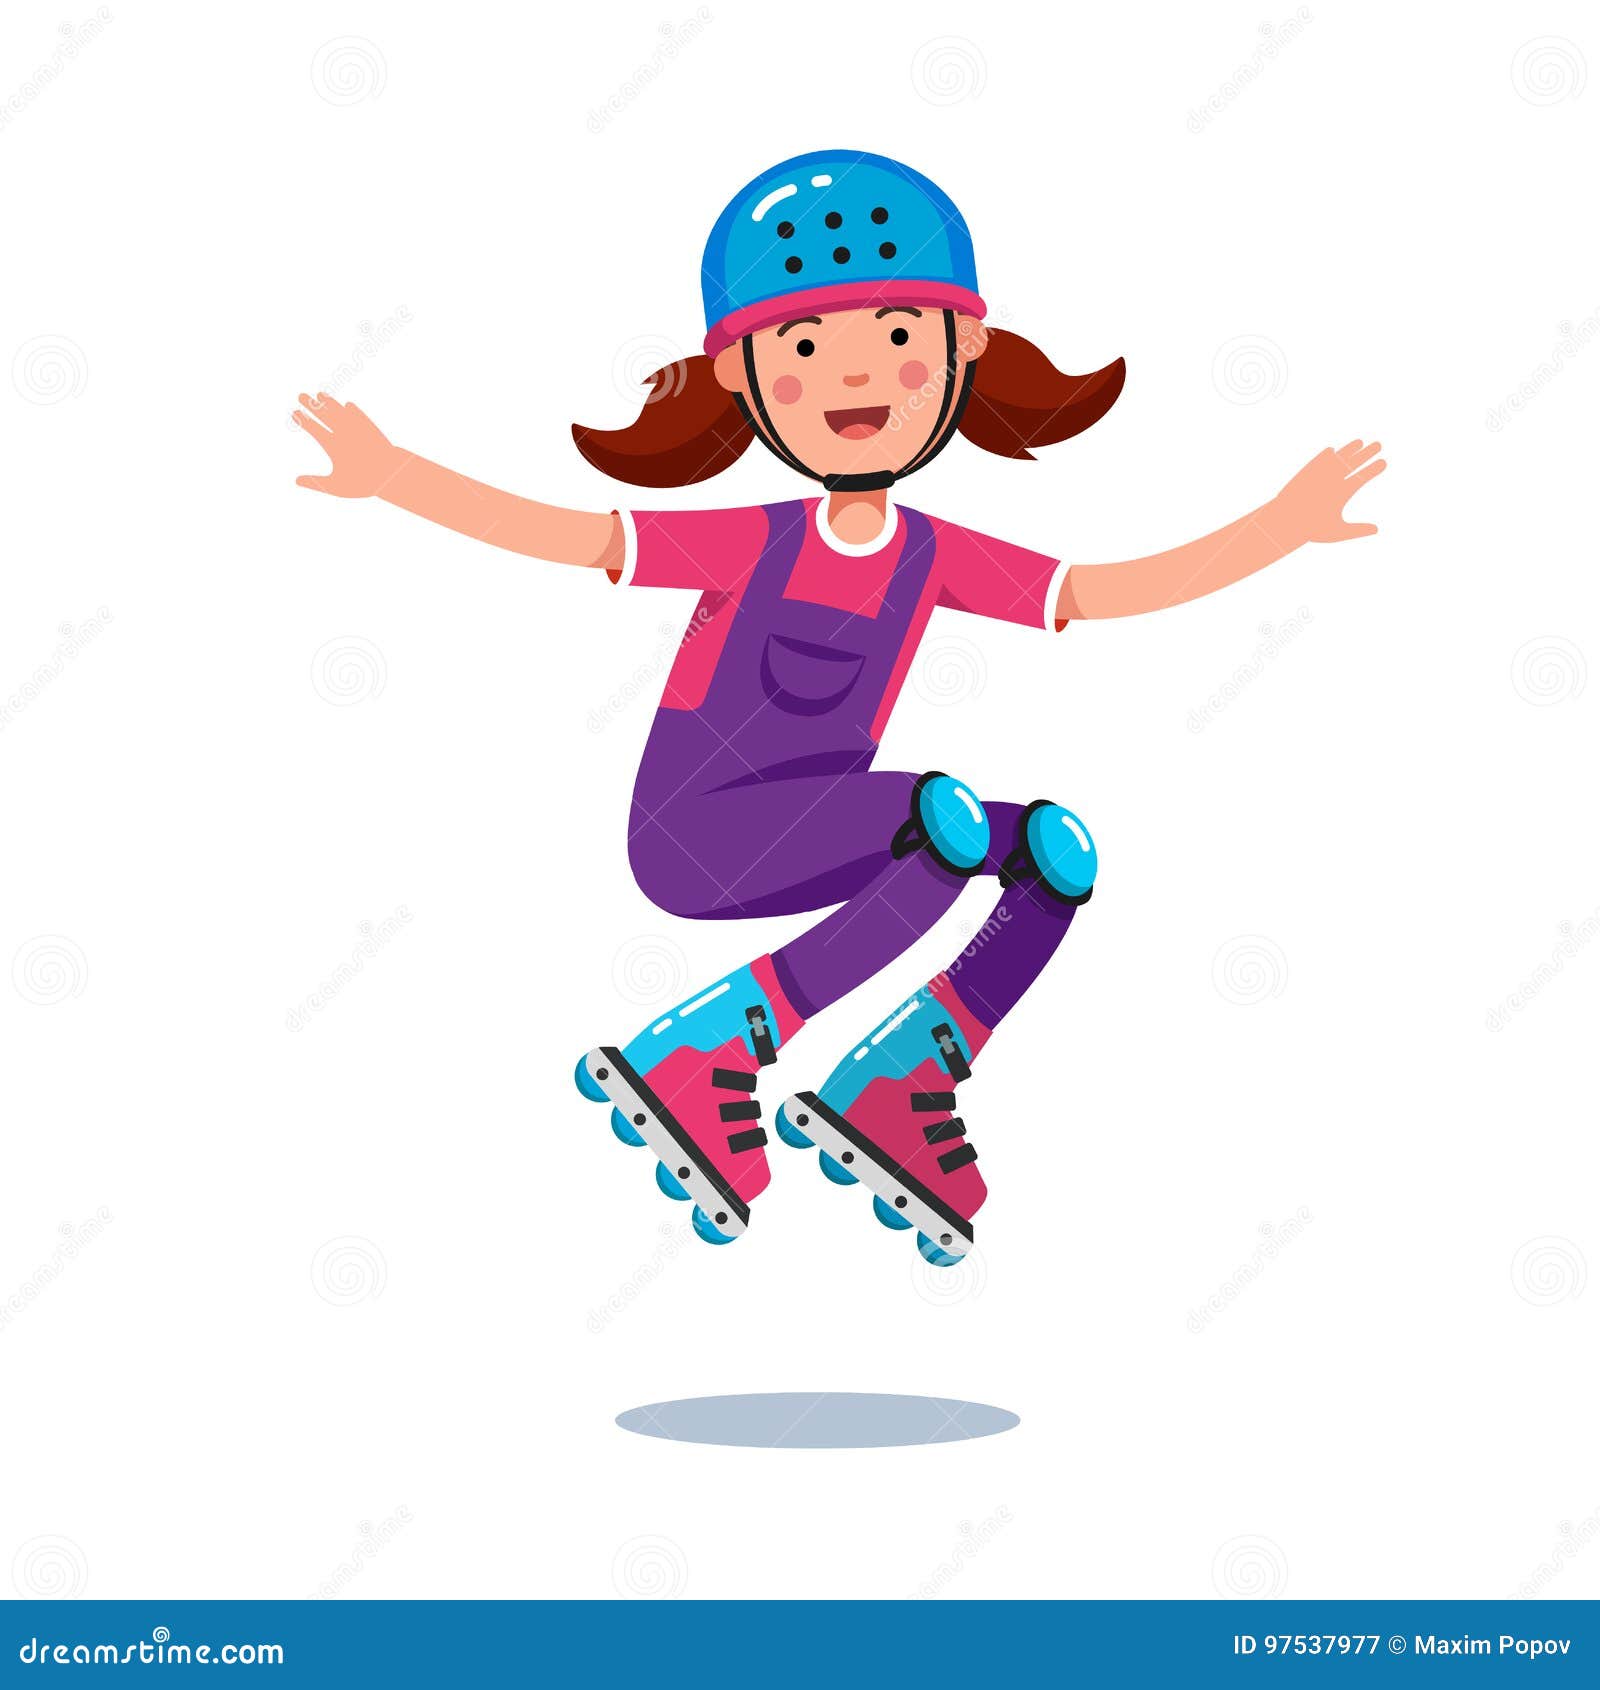 girl in jumpsuit, helmet jumping on roller blades